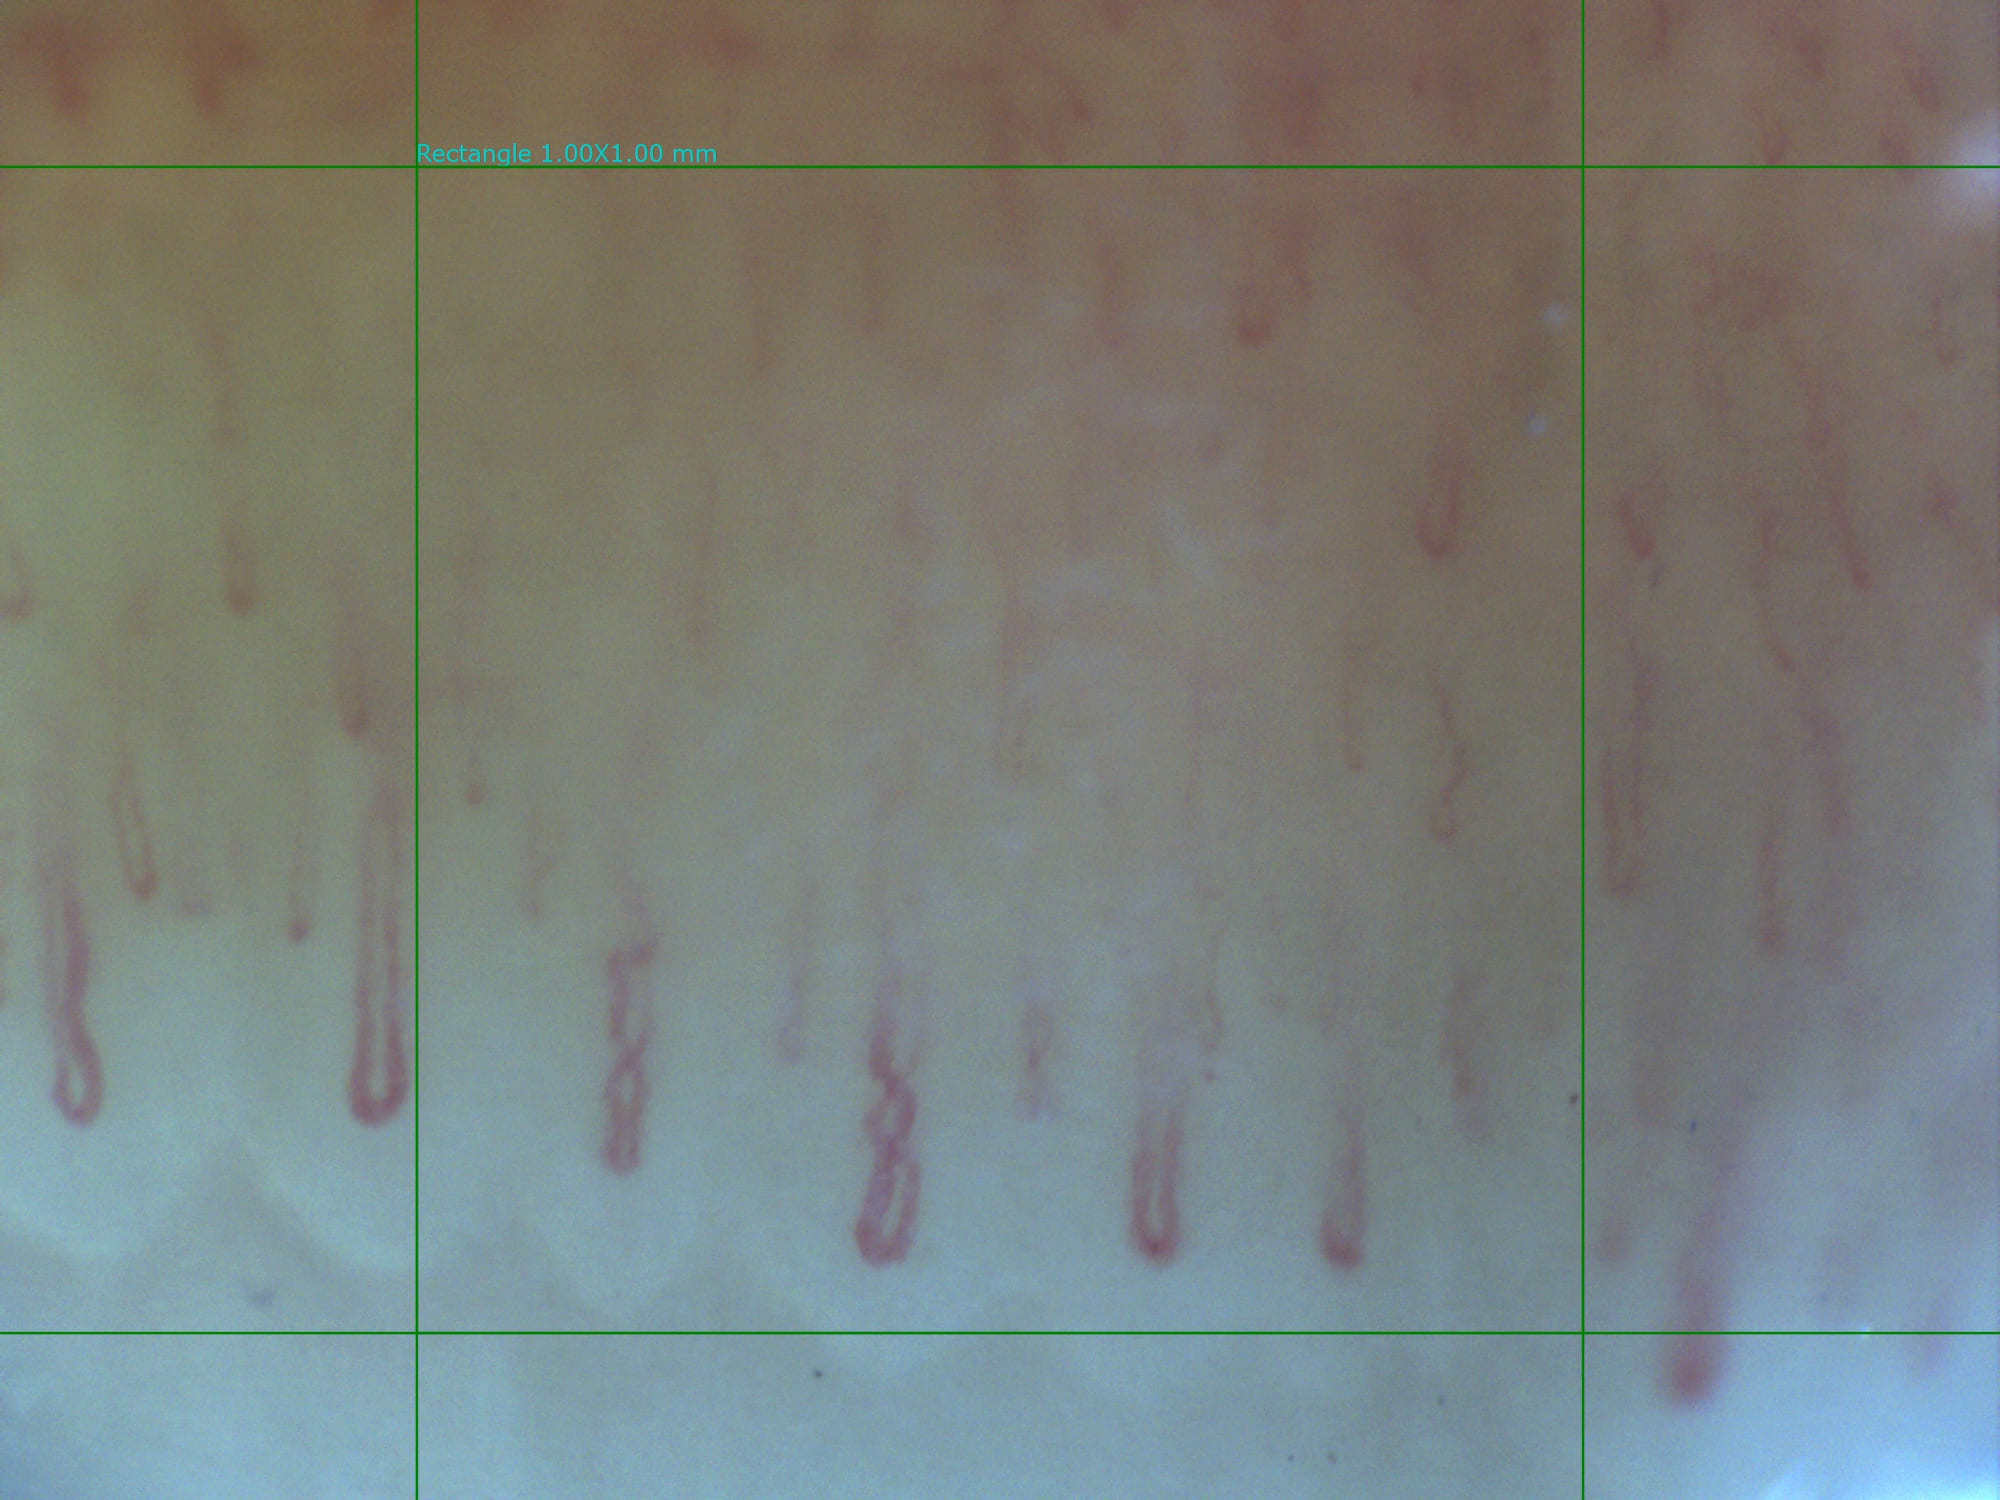 Capillaroscopy example with Optilia Digital Capillaroscope